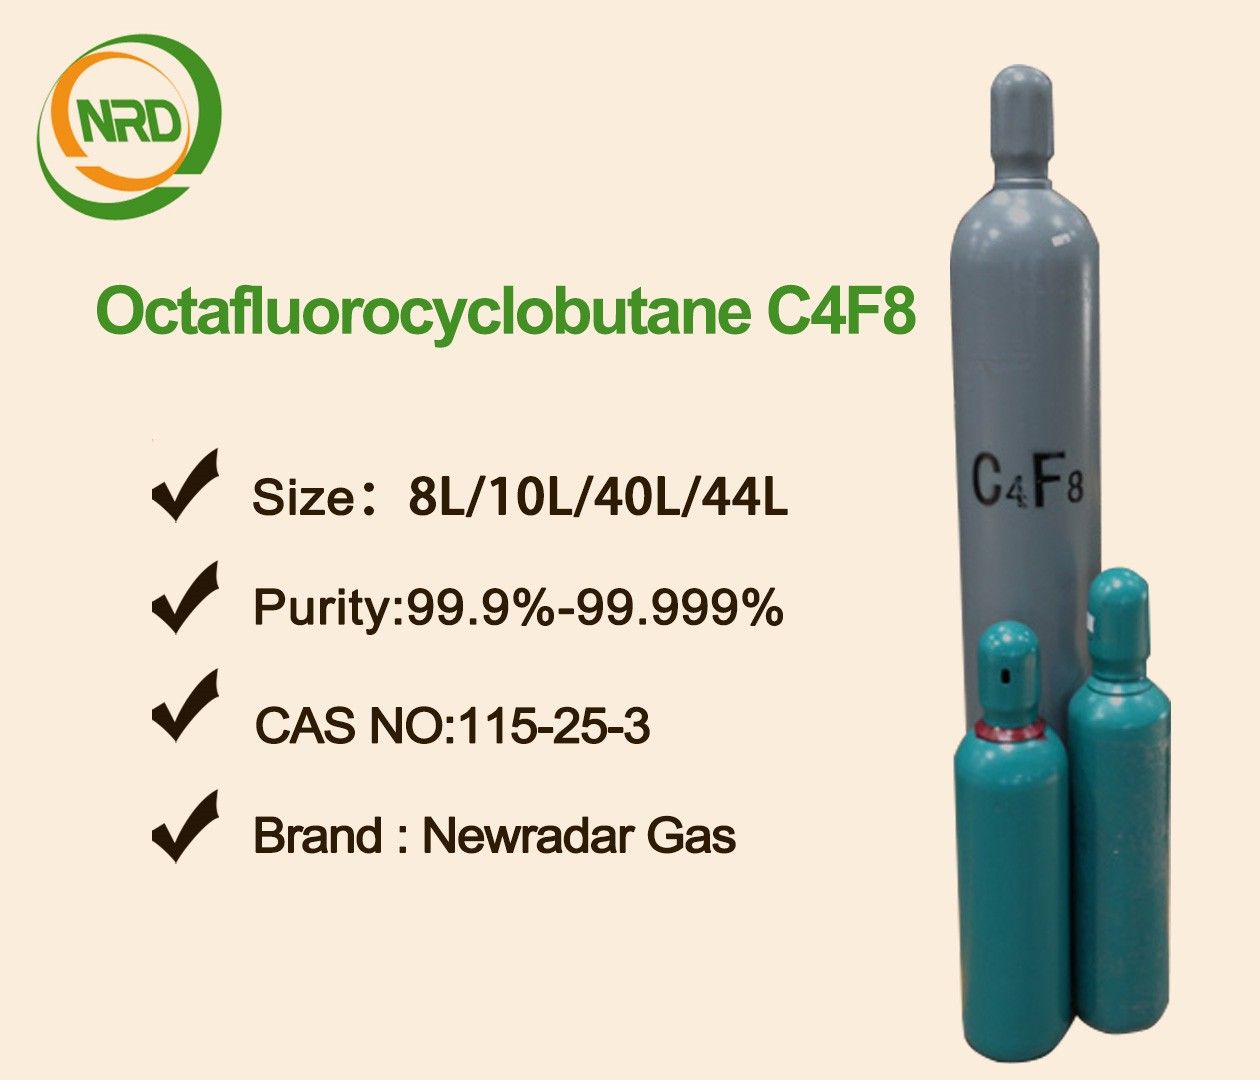 Octafluorocyclobutane: Synthesis and Prod...